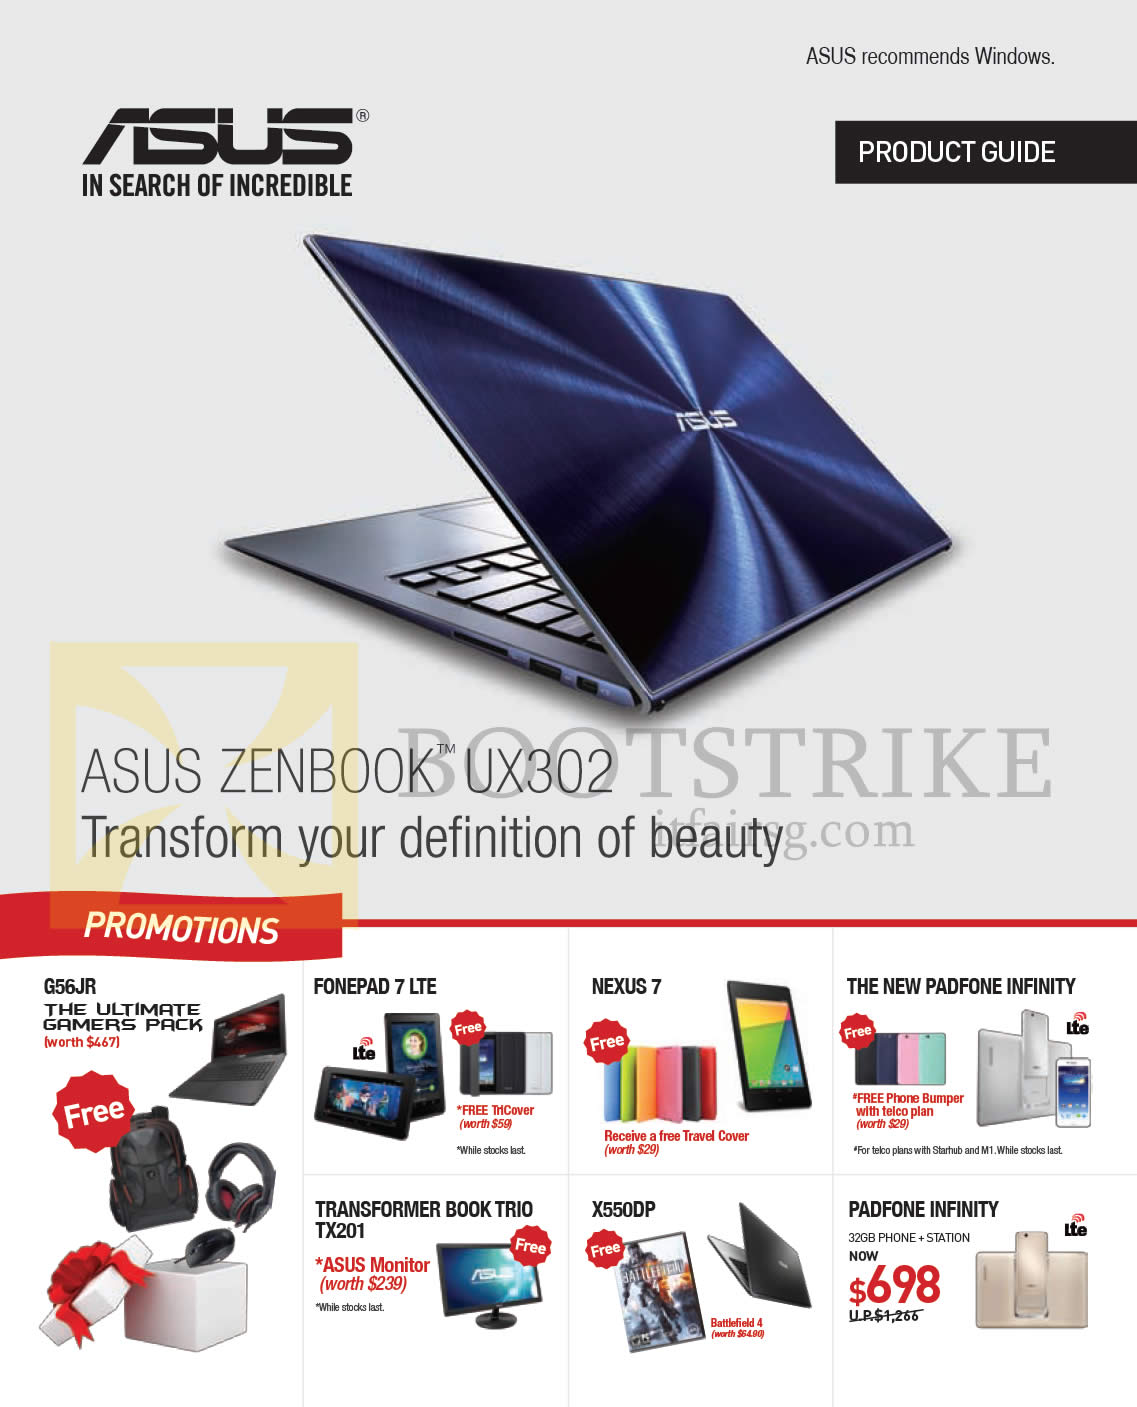 PC SHOW 2014 price list image brochure of ASUS Notebook, Accessories, Zenbook UX302, Fonepad 7, Nexus 7, Transformer Book Trio TX201, X550DP, Padfone Infinity